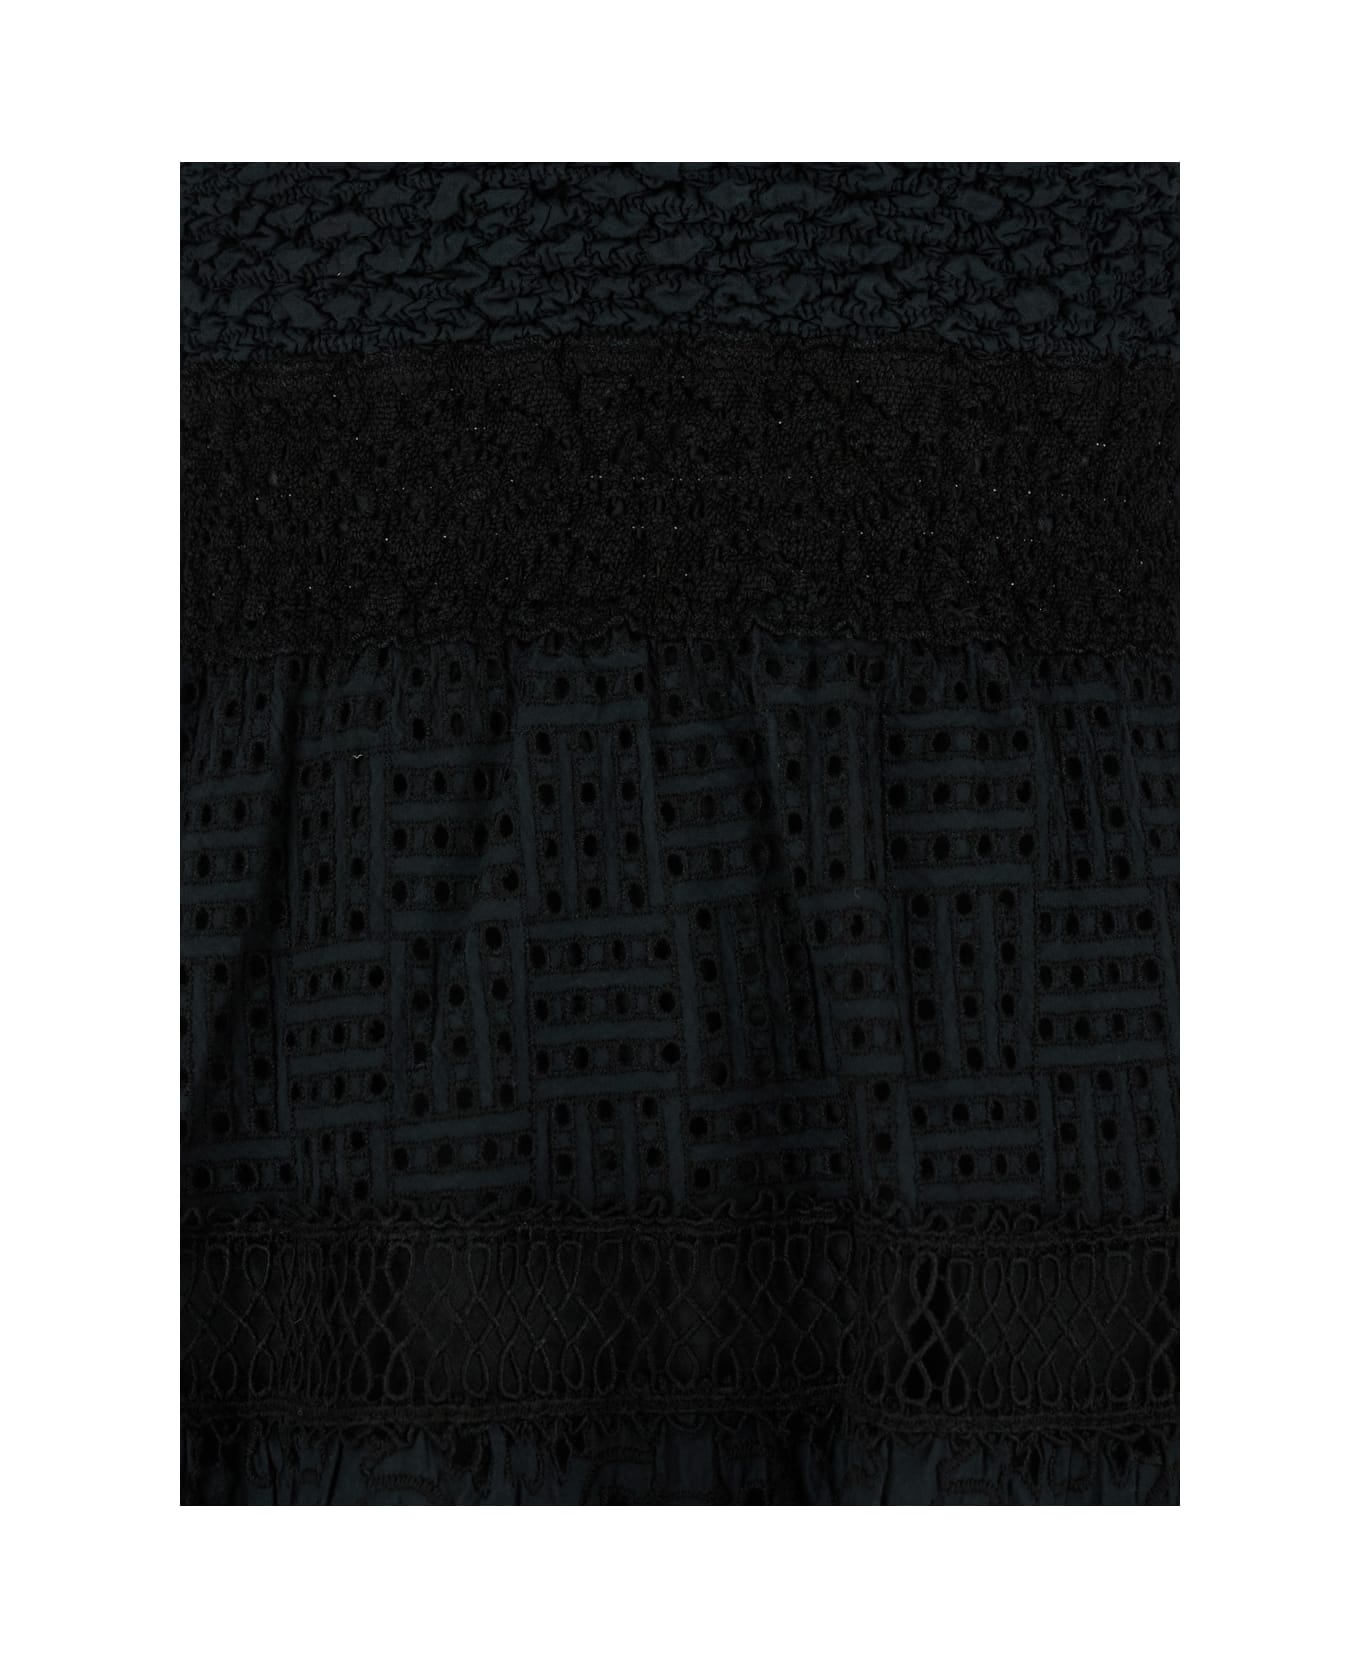 Temptation Positano Black Short Embroidered Dress In Cotton Woman - Black